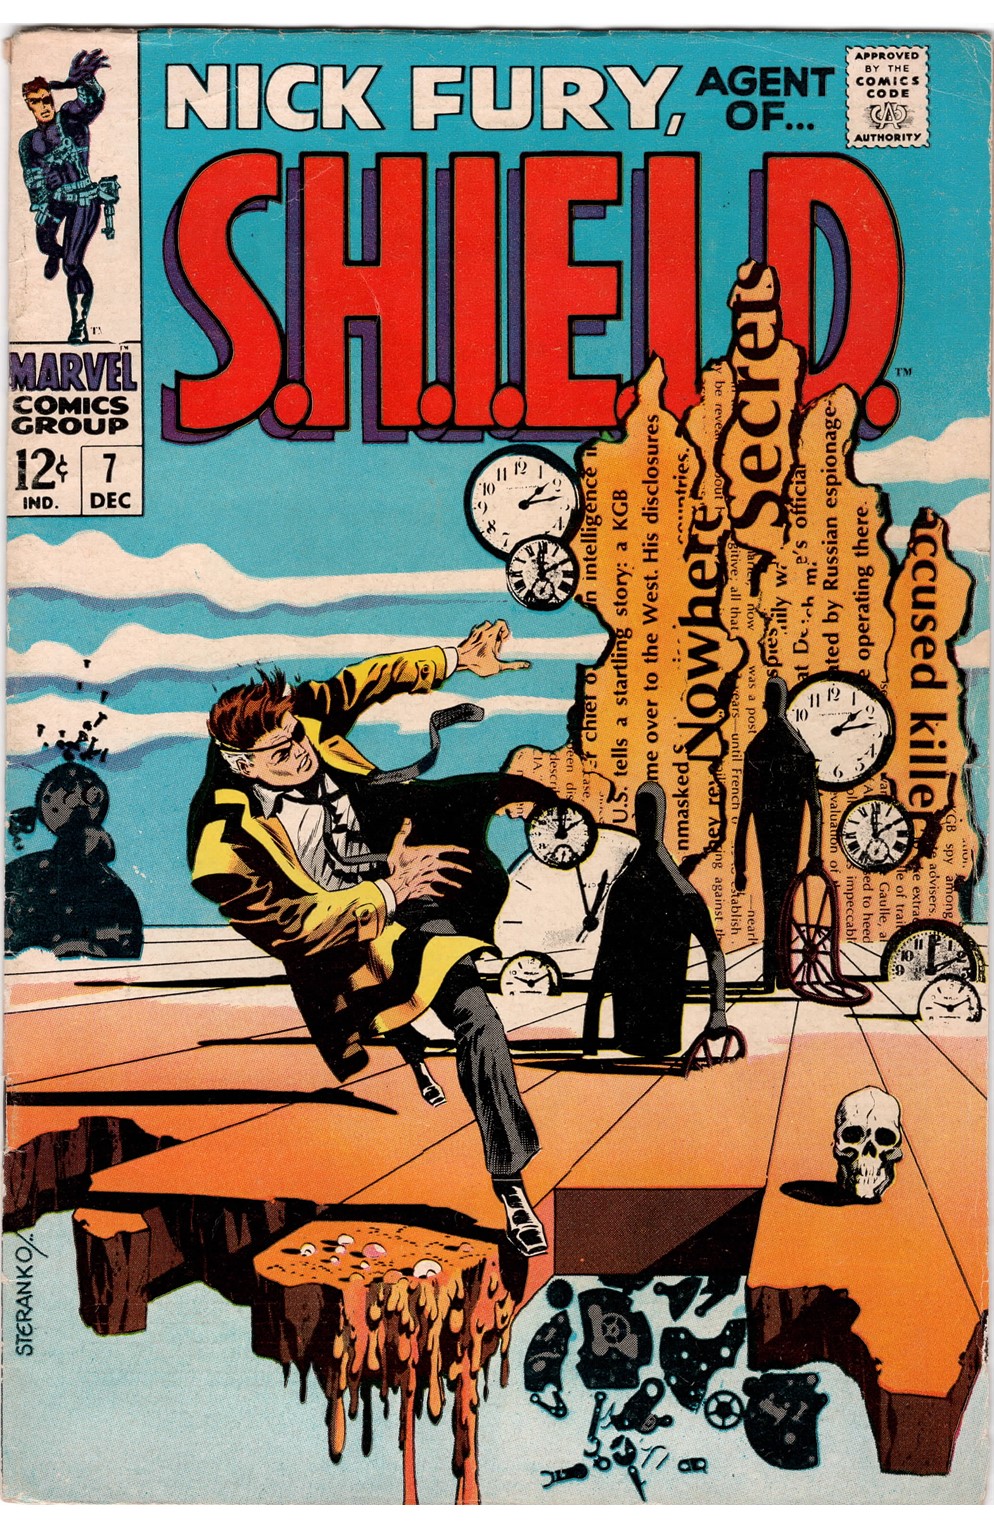 Nick Fury Agent of Shield #07